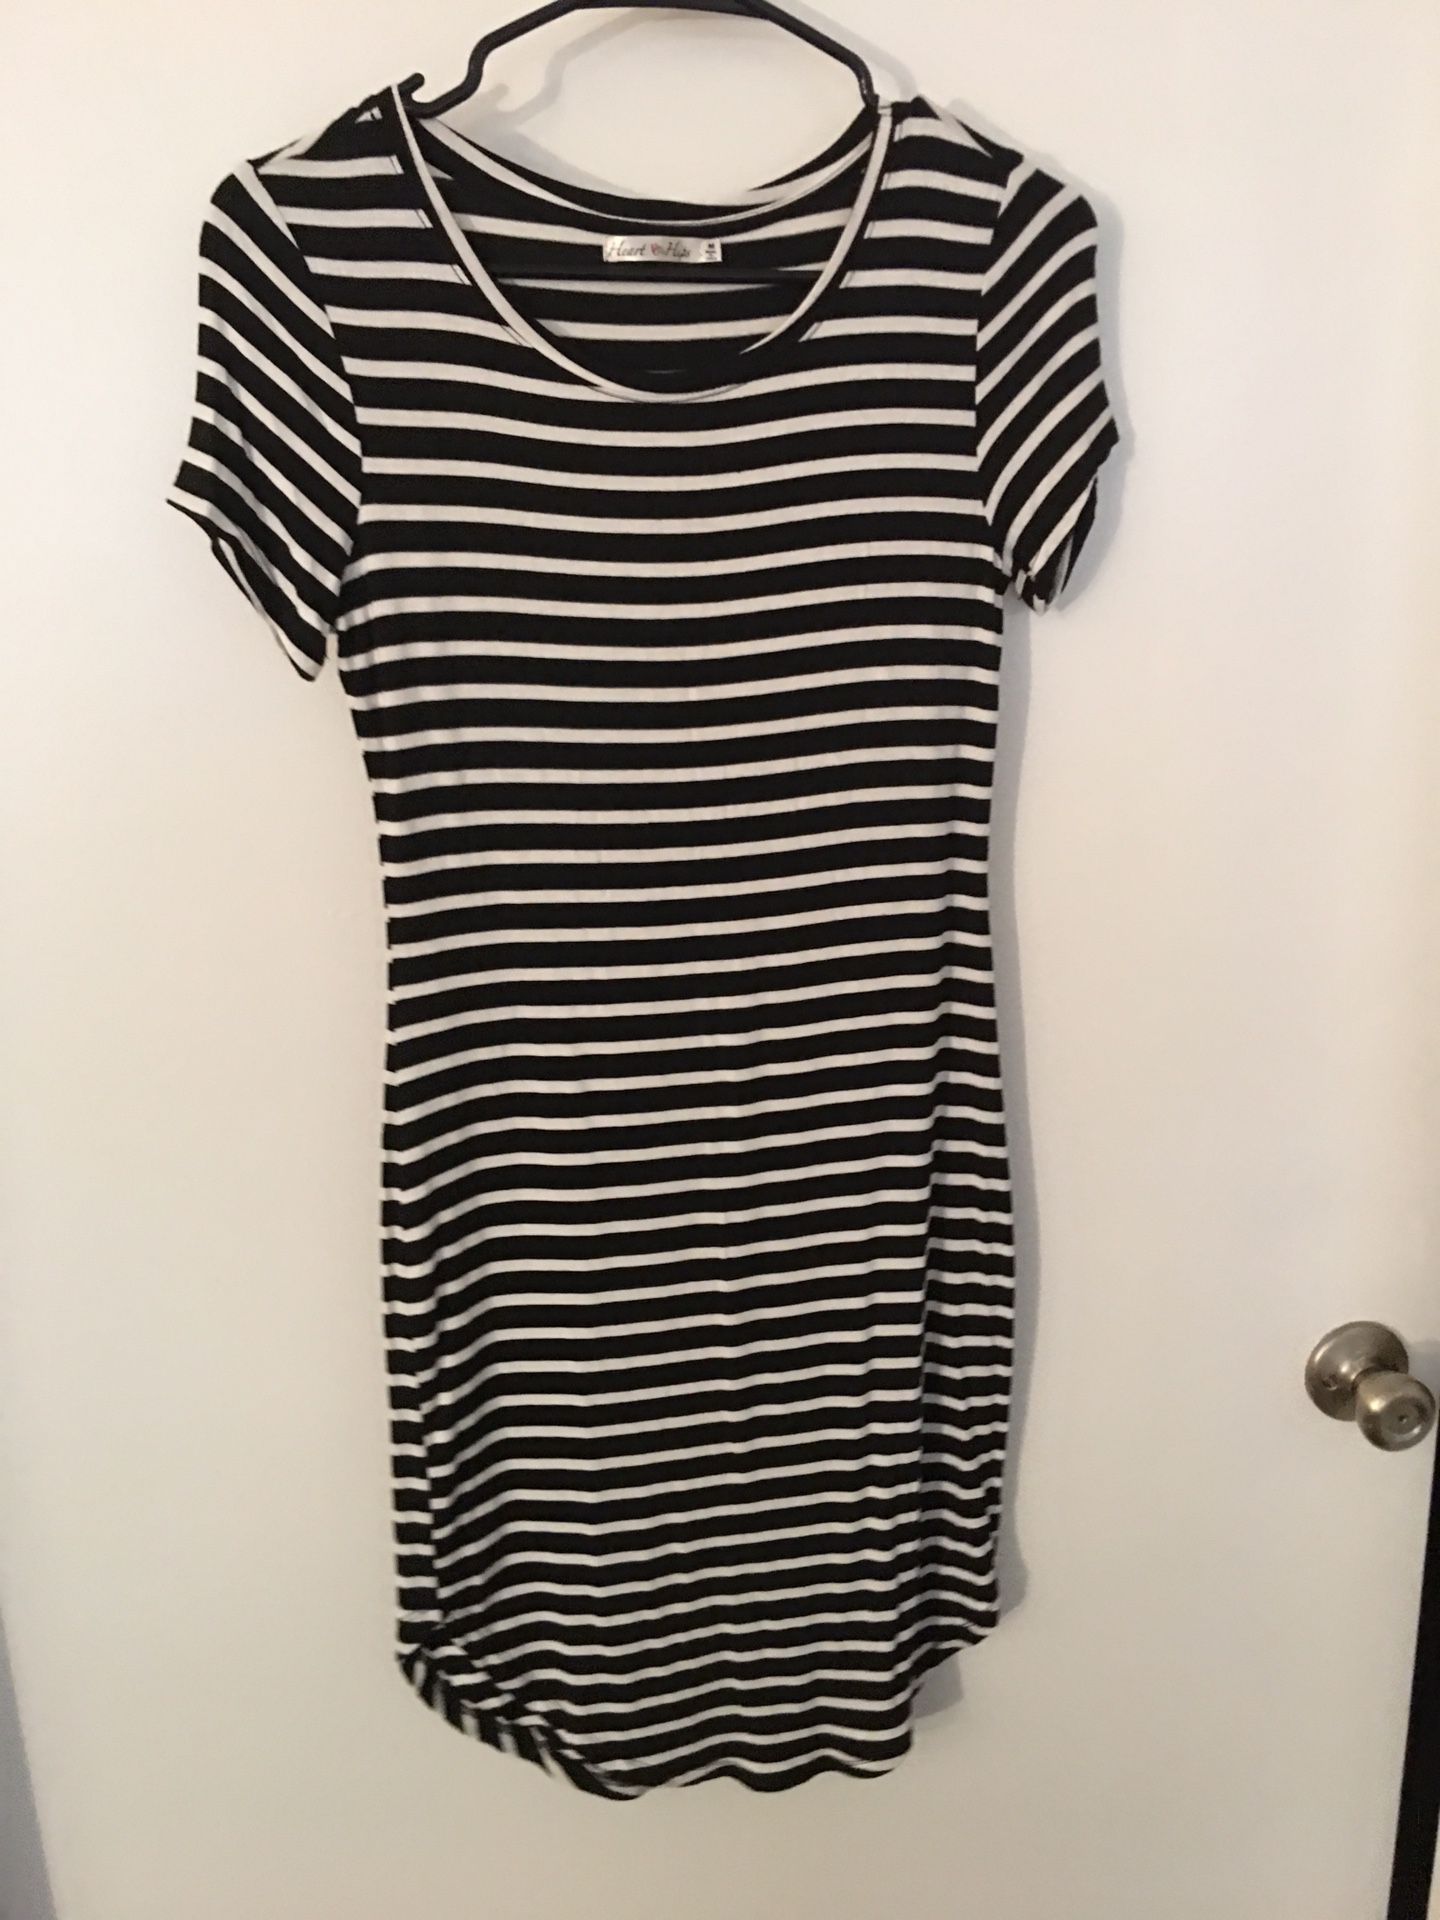 Black and white striped dress size medium